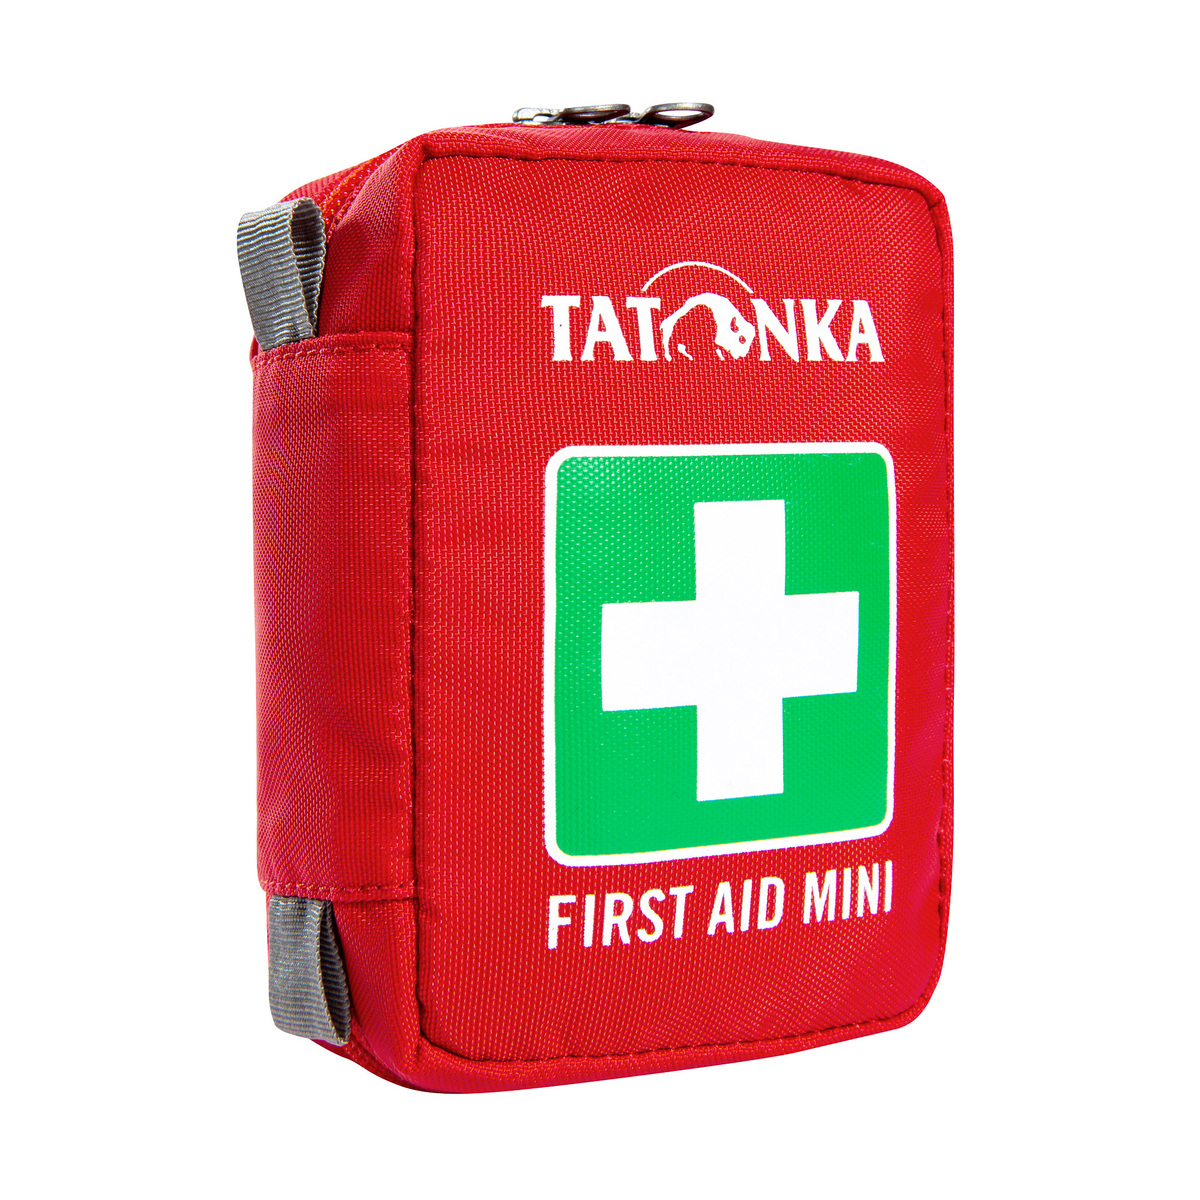  Tatonka First Aid Mini